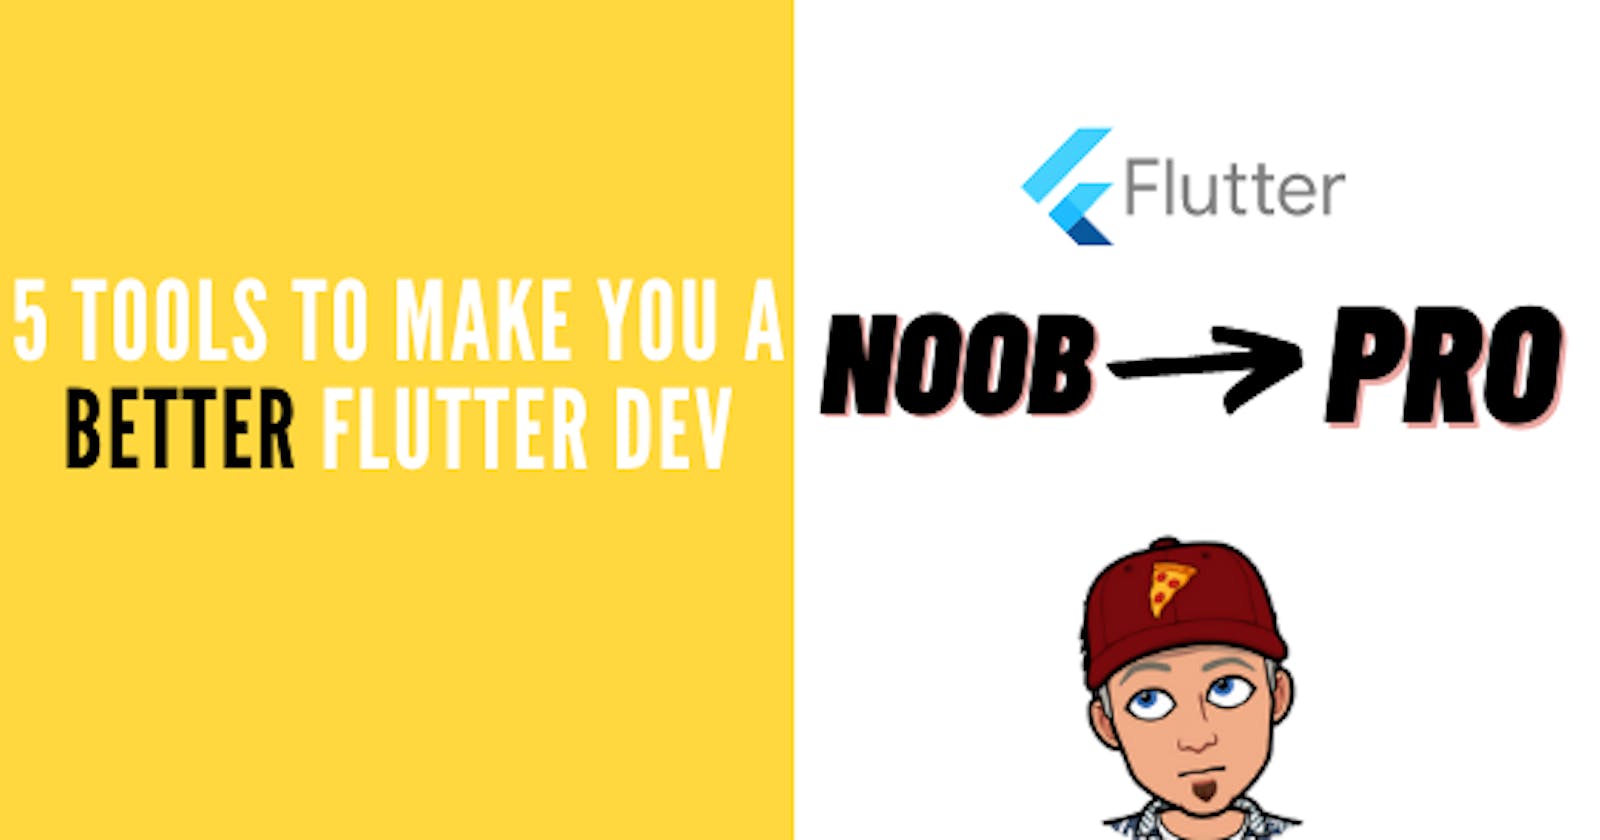 5 Tools to make you a Super-efficient and better Flutter developer.